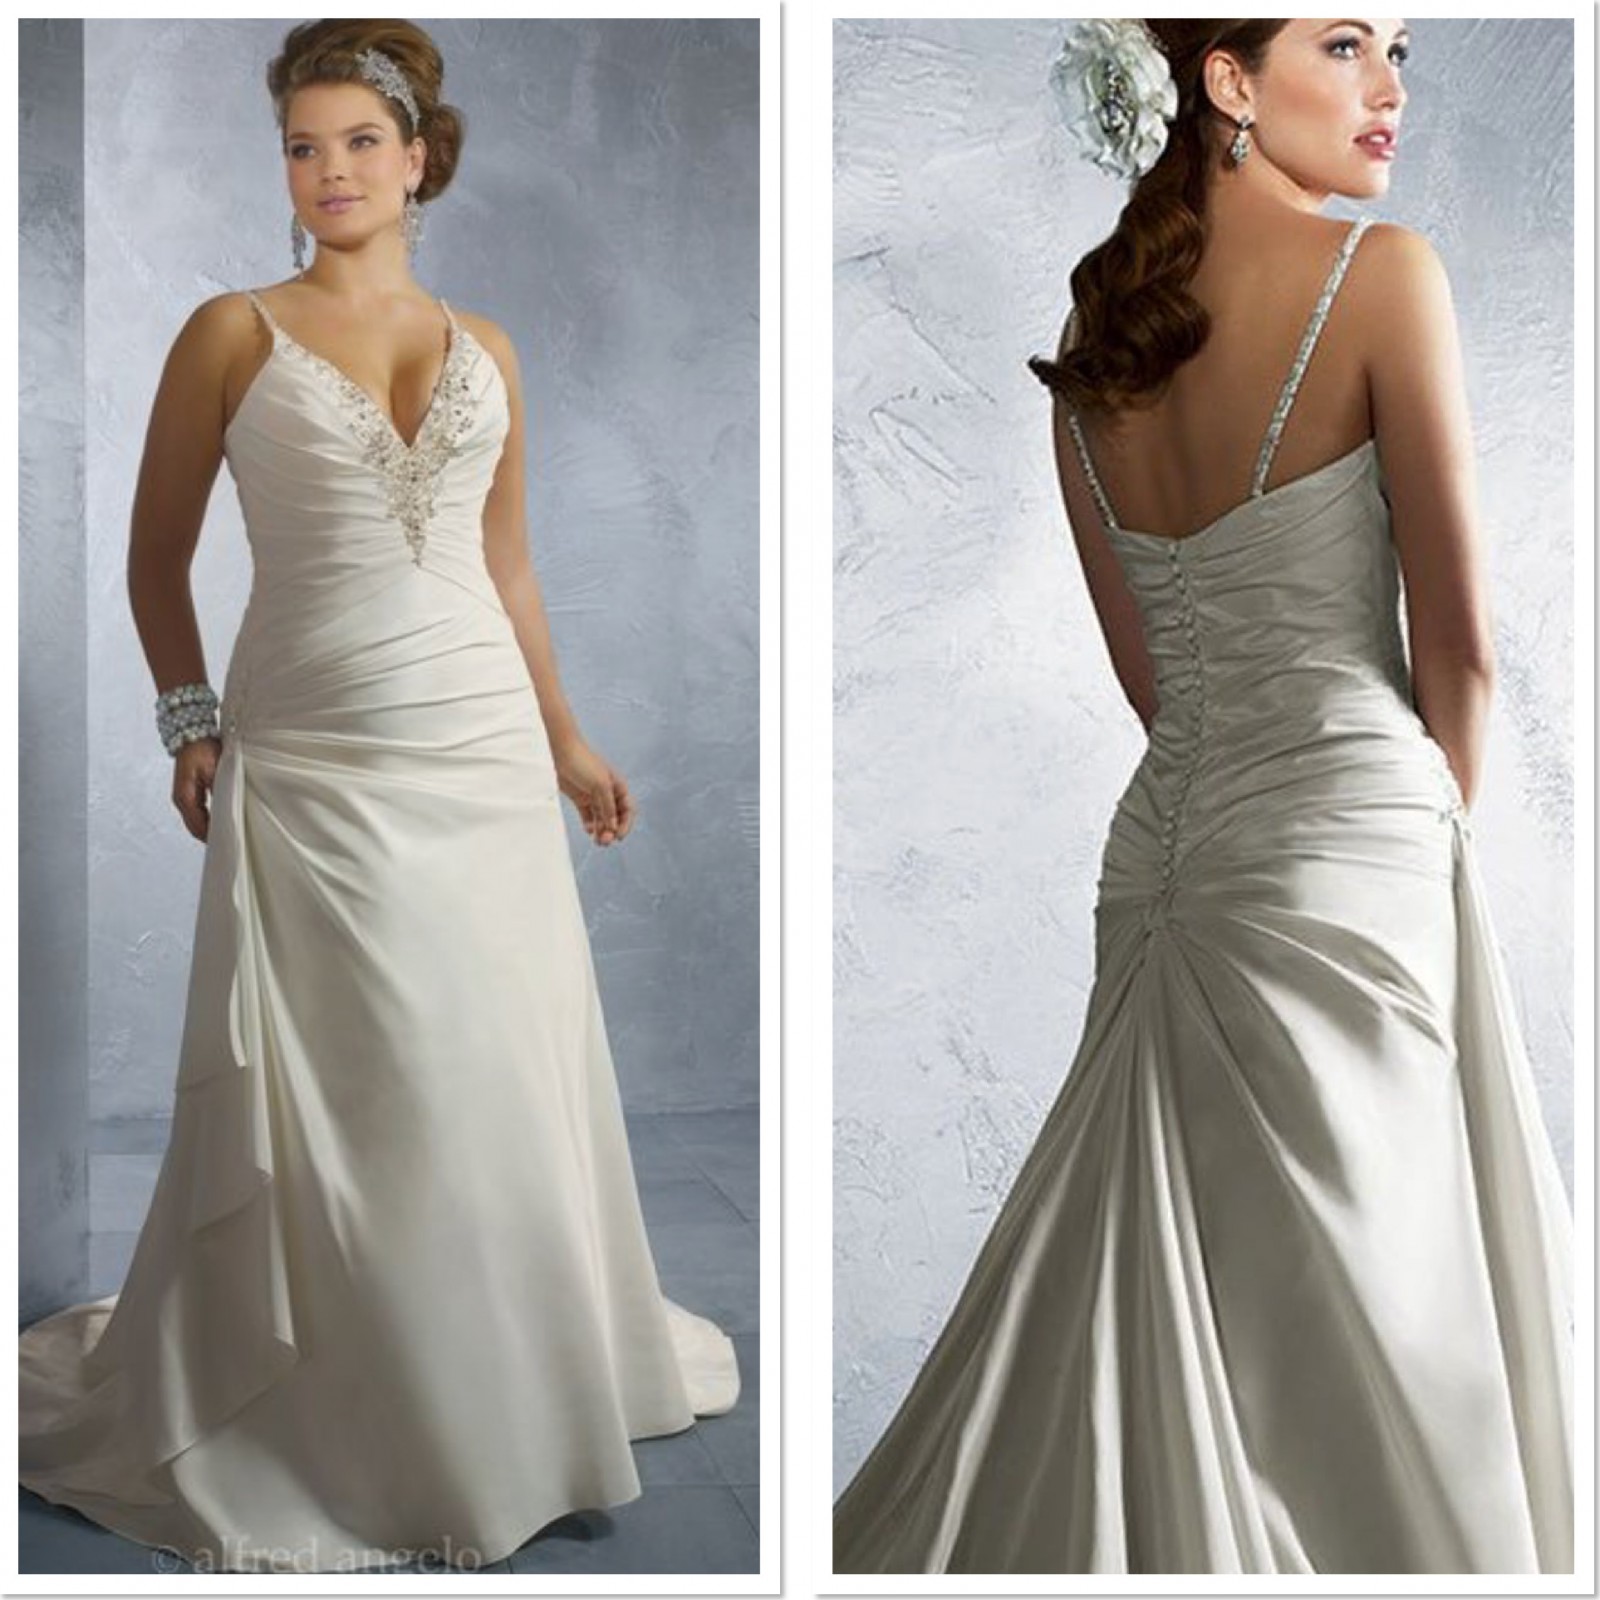 Alfred Angelo 2183C Wedding Dress Save 62% - Stillwhite